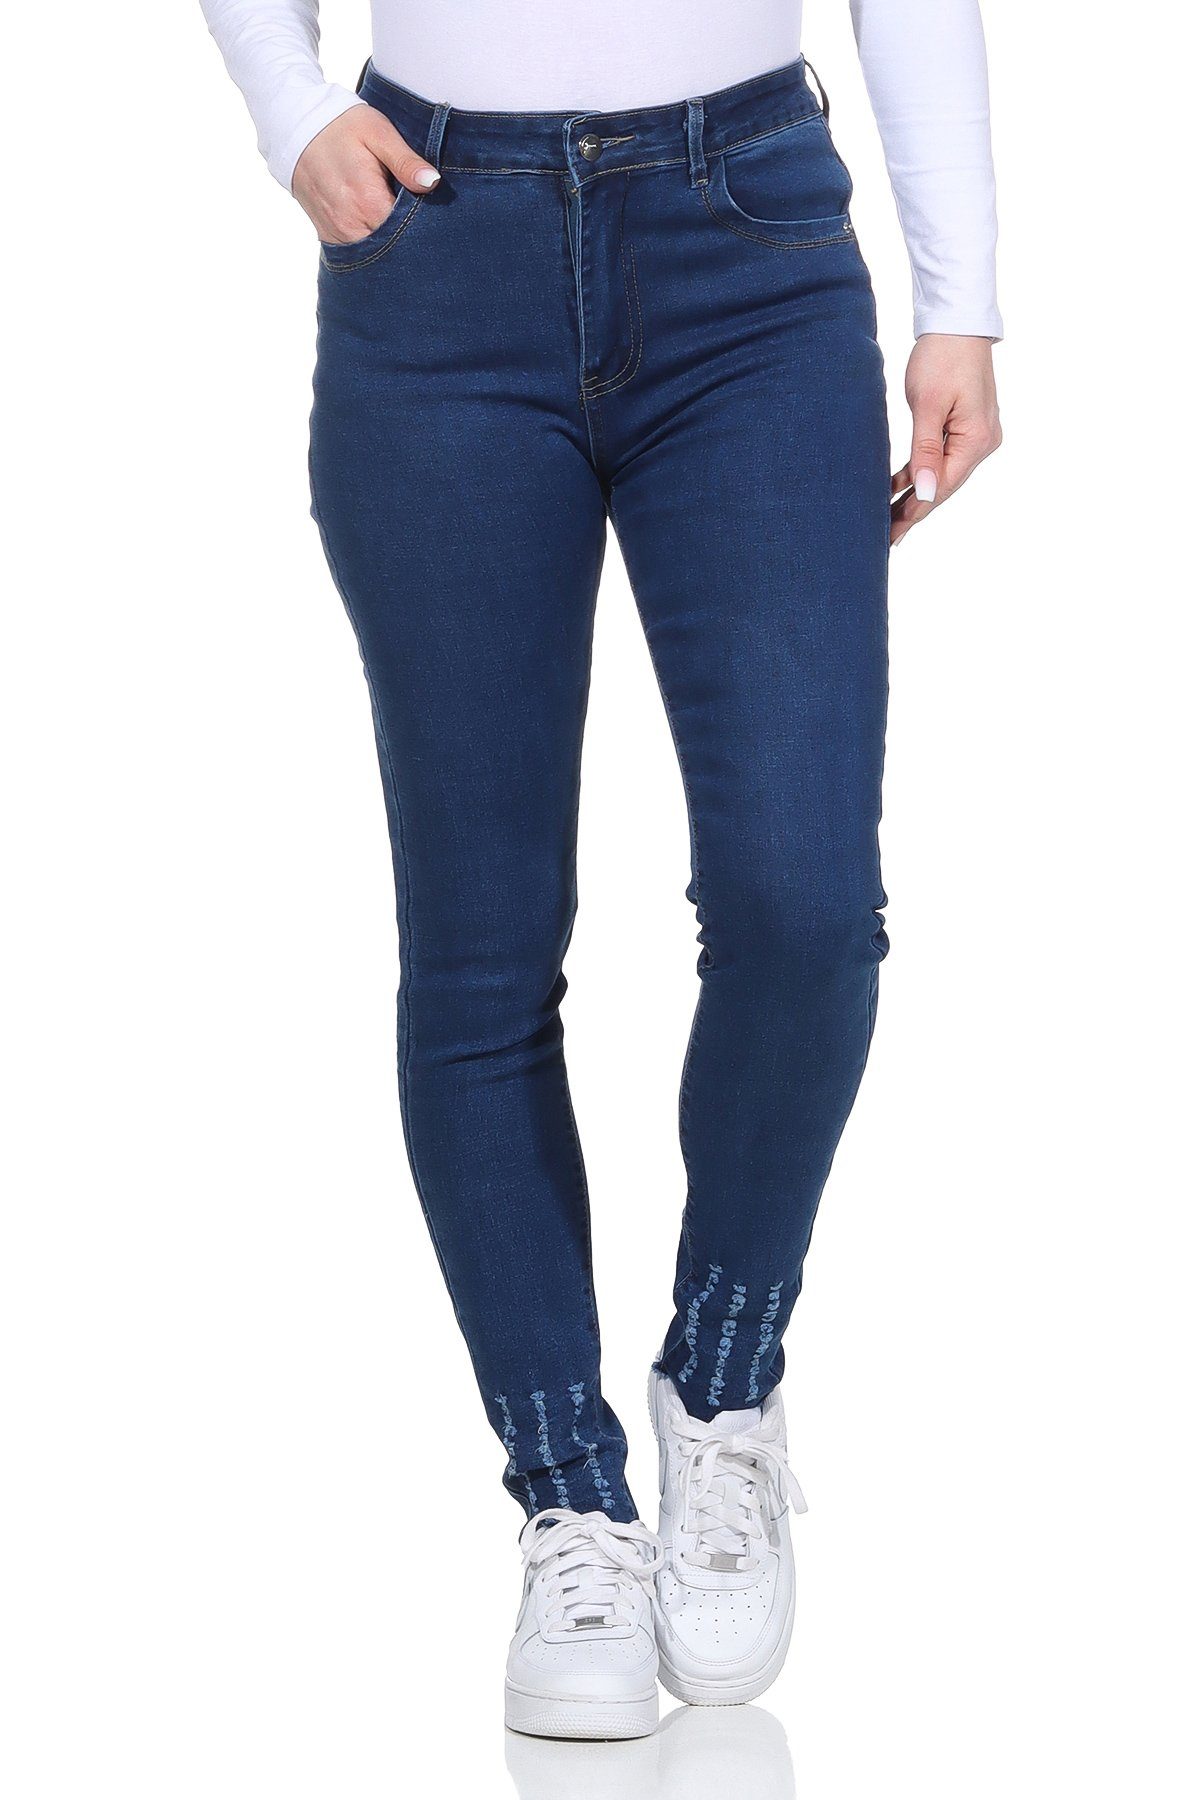 Aurela Damenmode 5-Pocket-Jeans Jeanshosen für Damen Stretch Jeans Destroyed Look moderner Distressed Look Dunkelblau